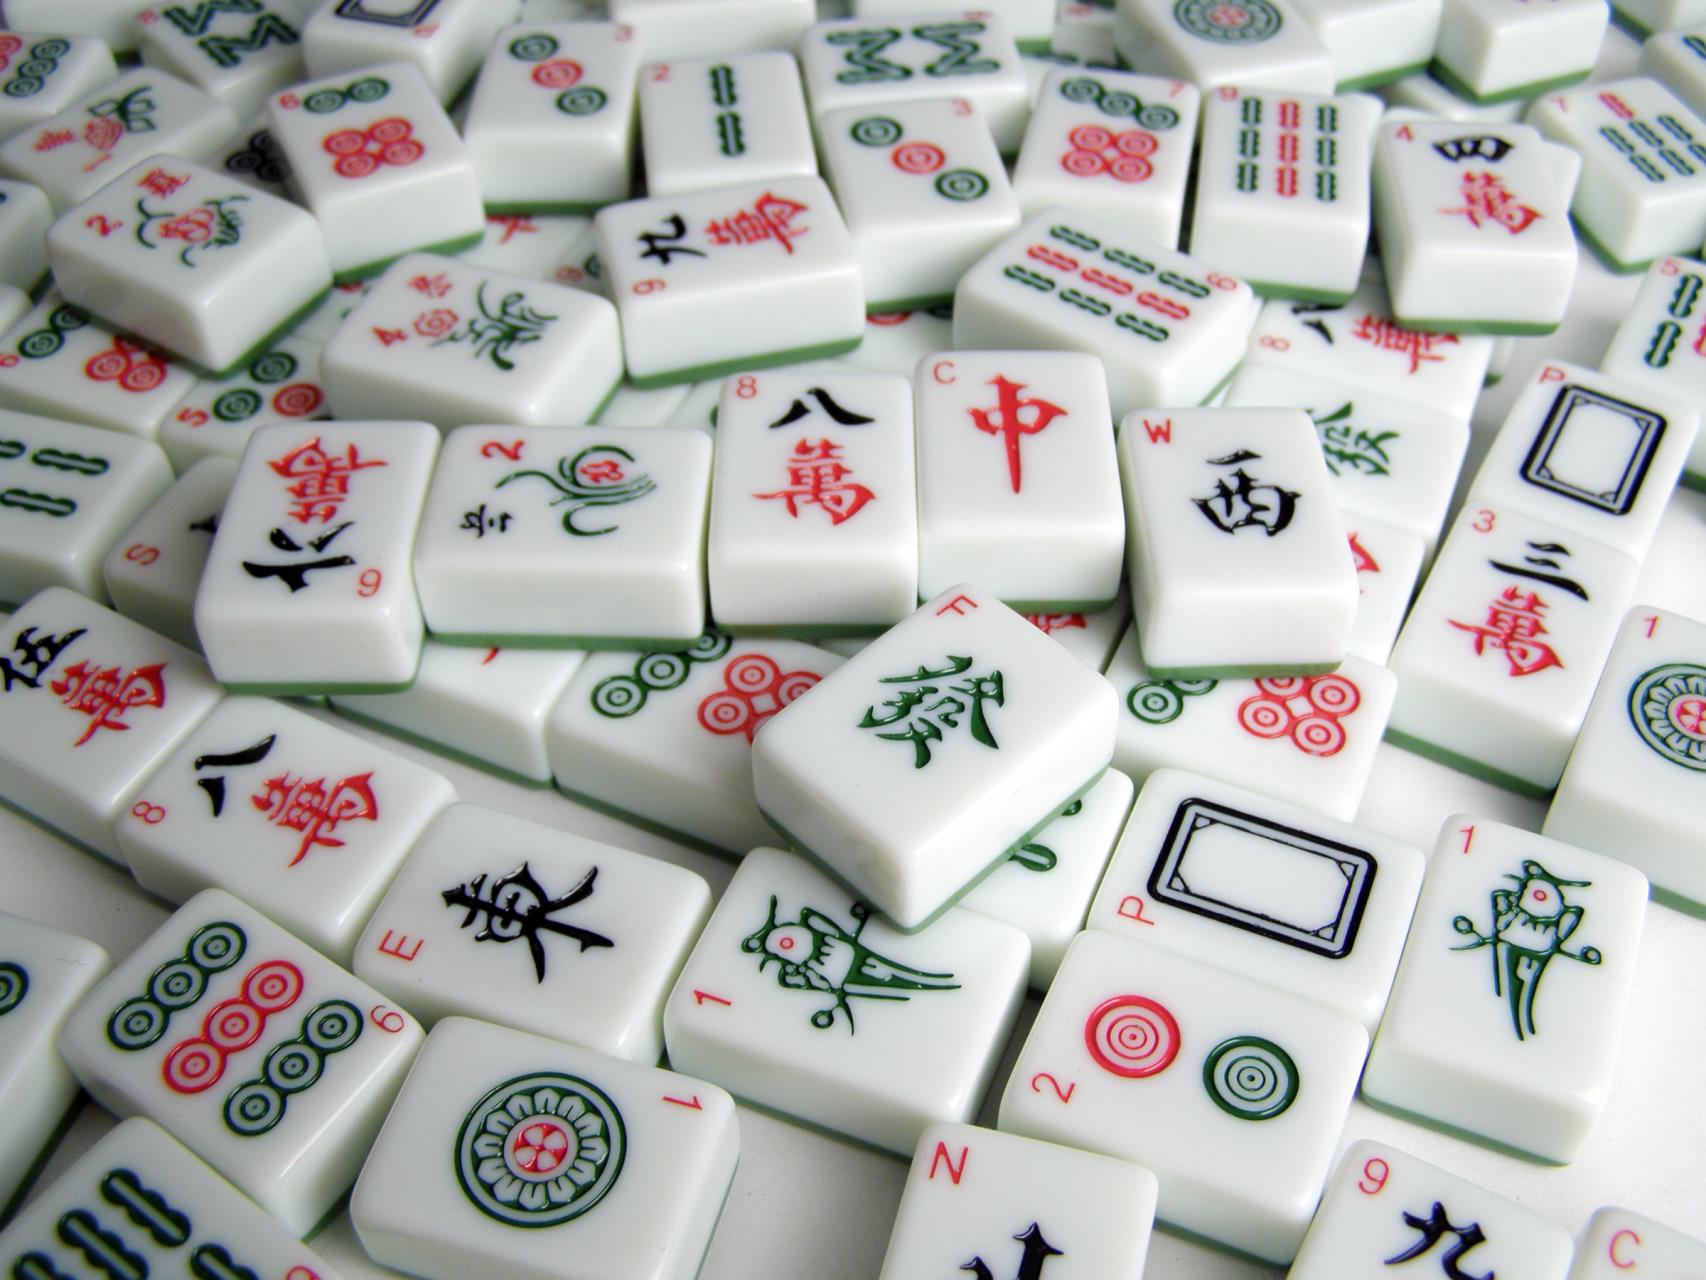 Monthly mahjong club